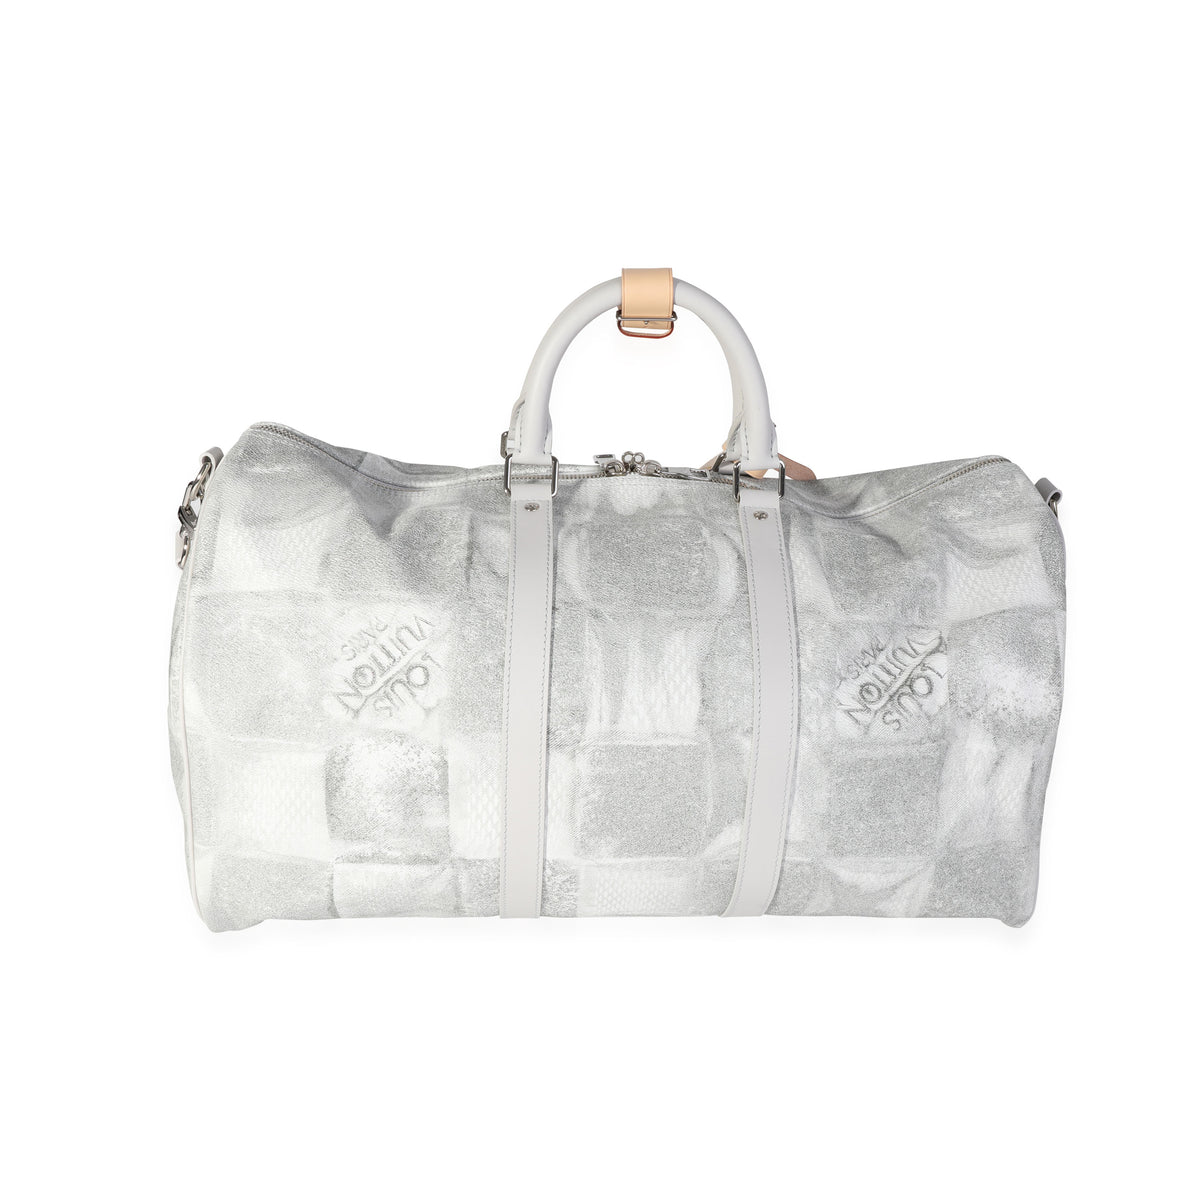 Louis Vuitton Discovery Backpack Damier Salt Canvas PM